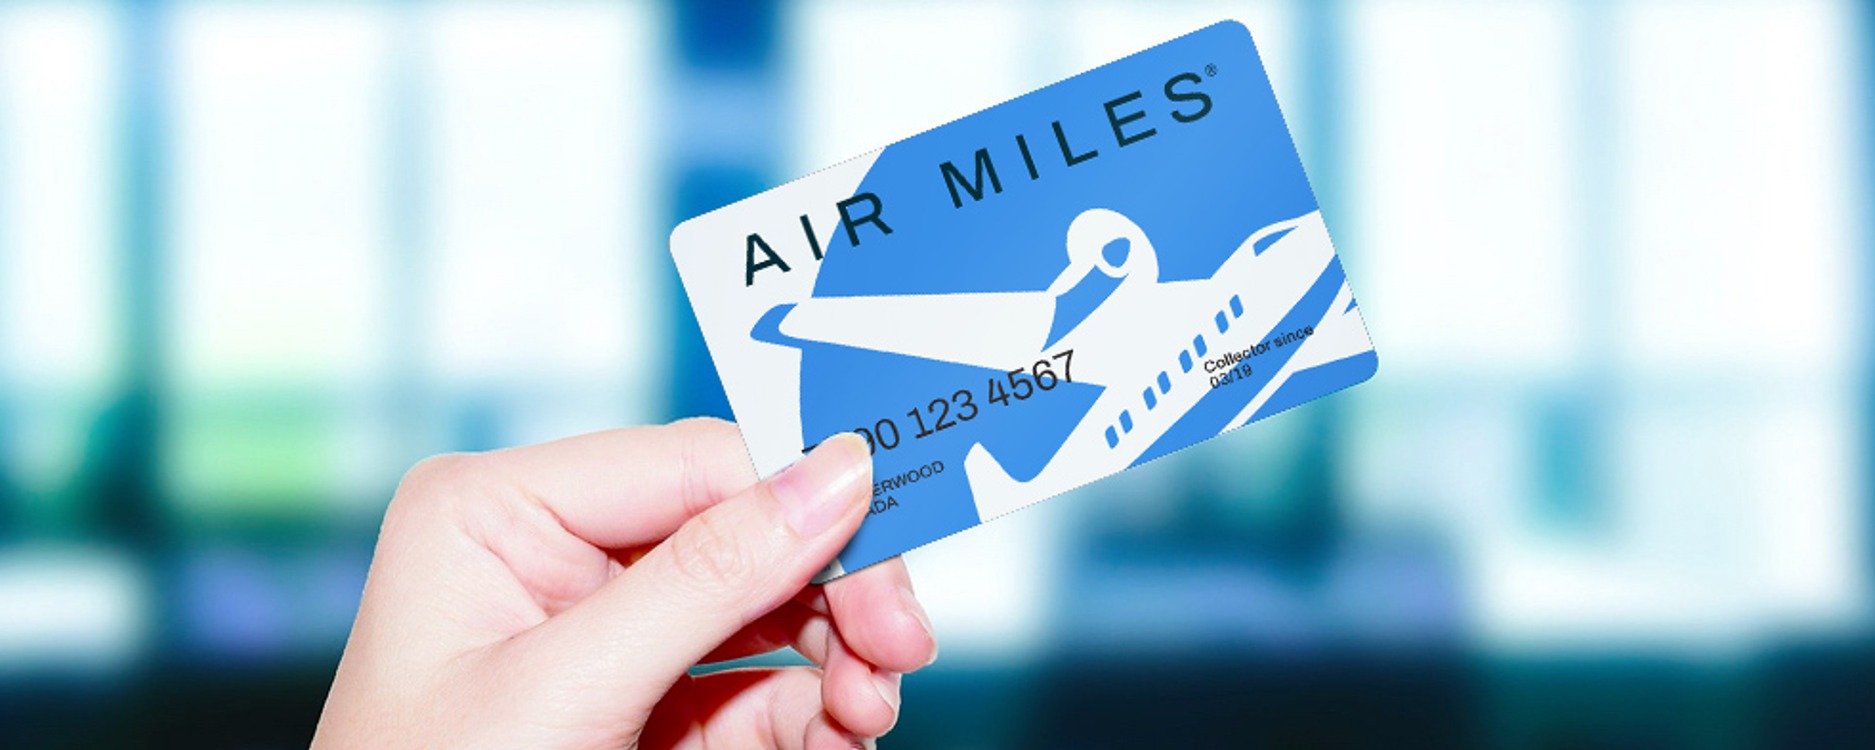 air miles travel booking